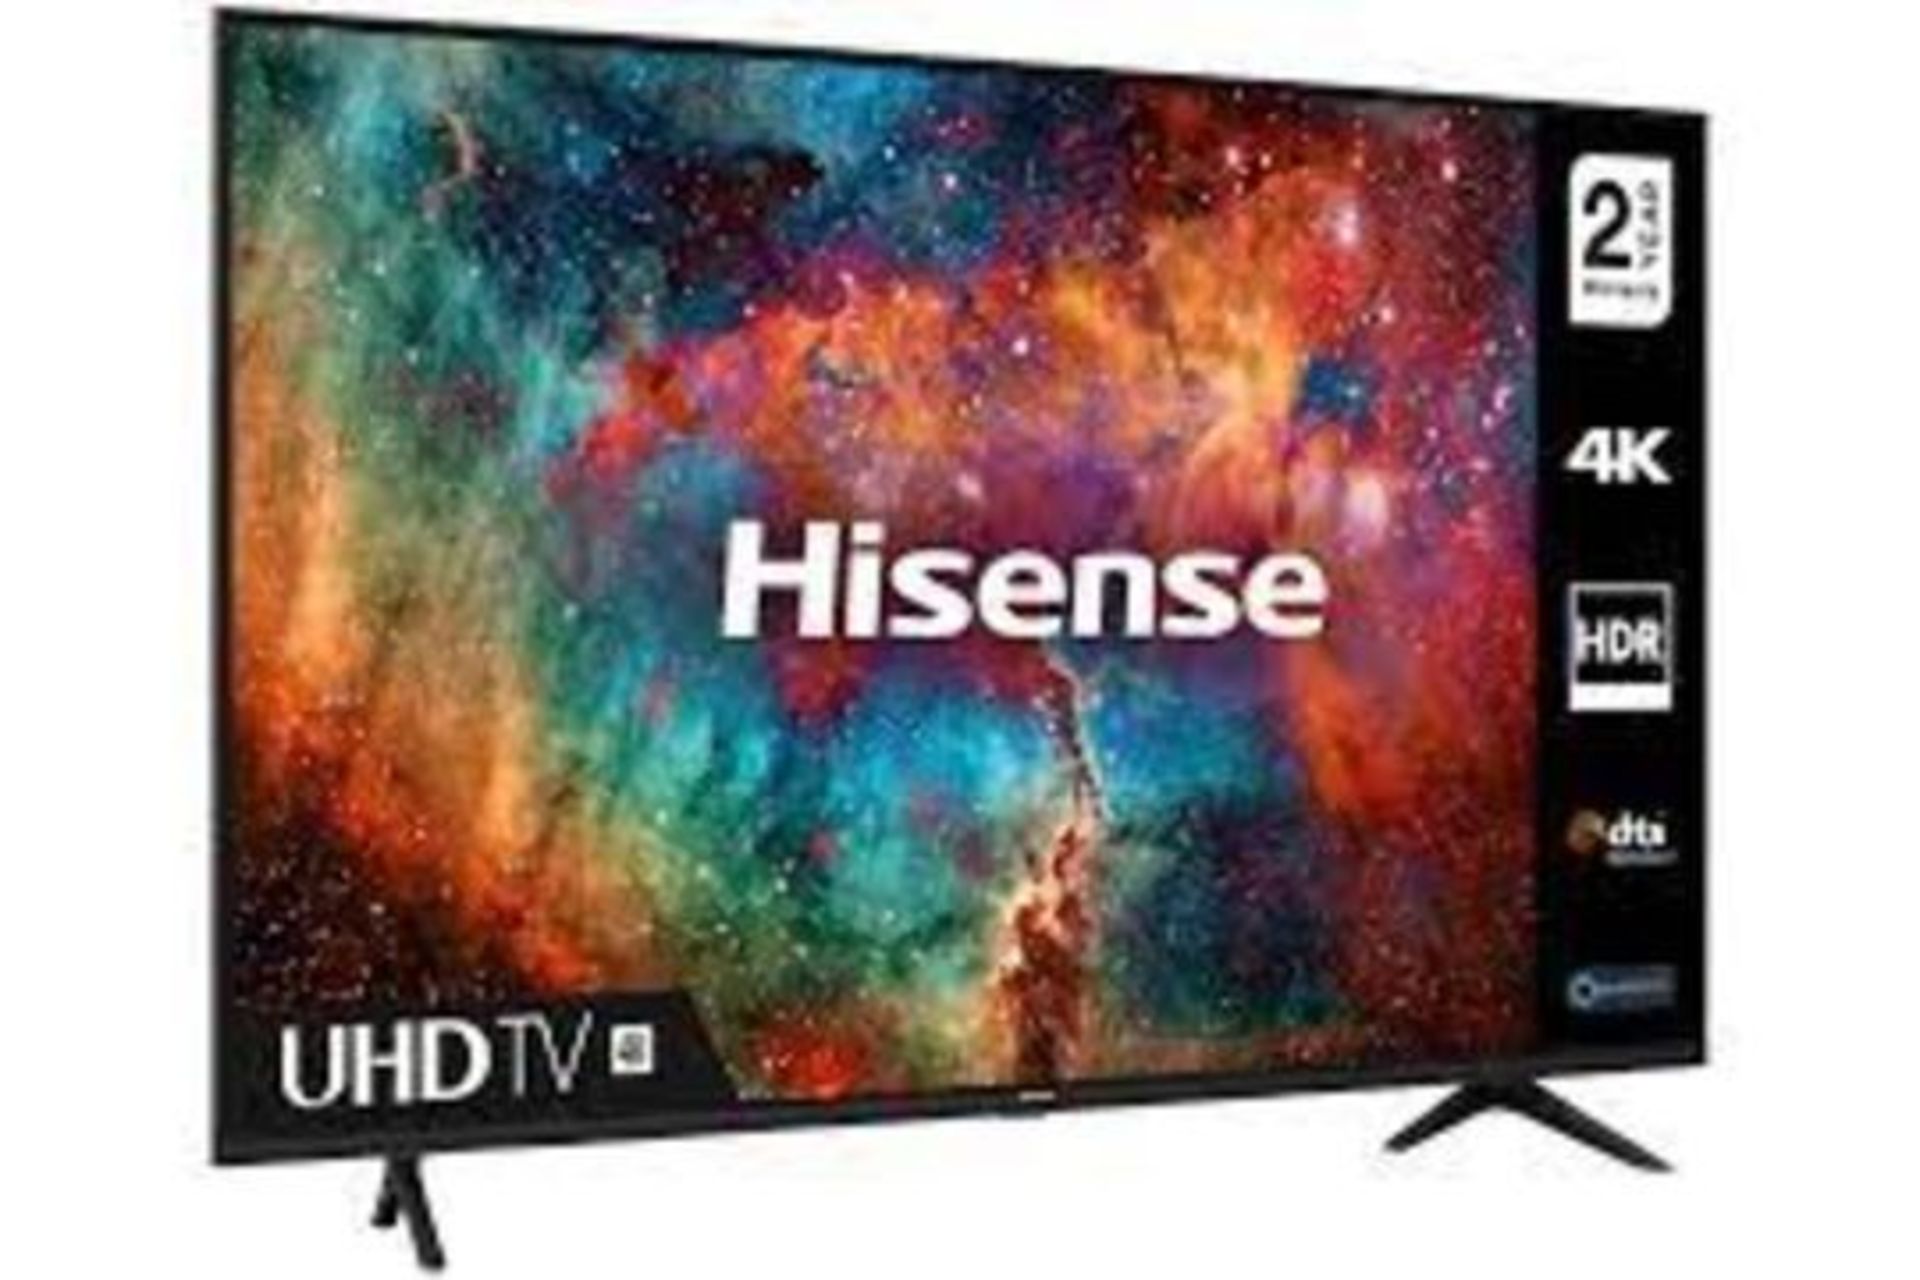 HISENSE 43 INCH A7 SERIES UHD SMART TV RRP £429